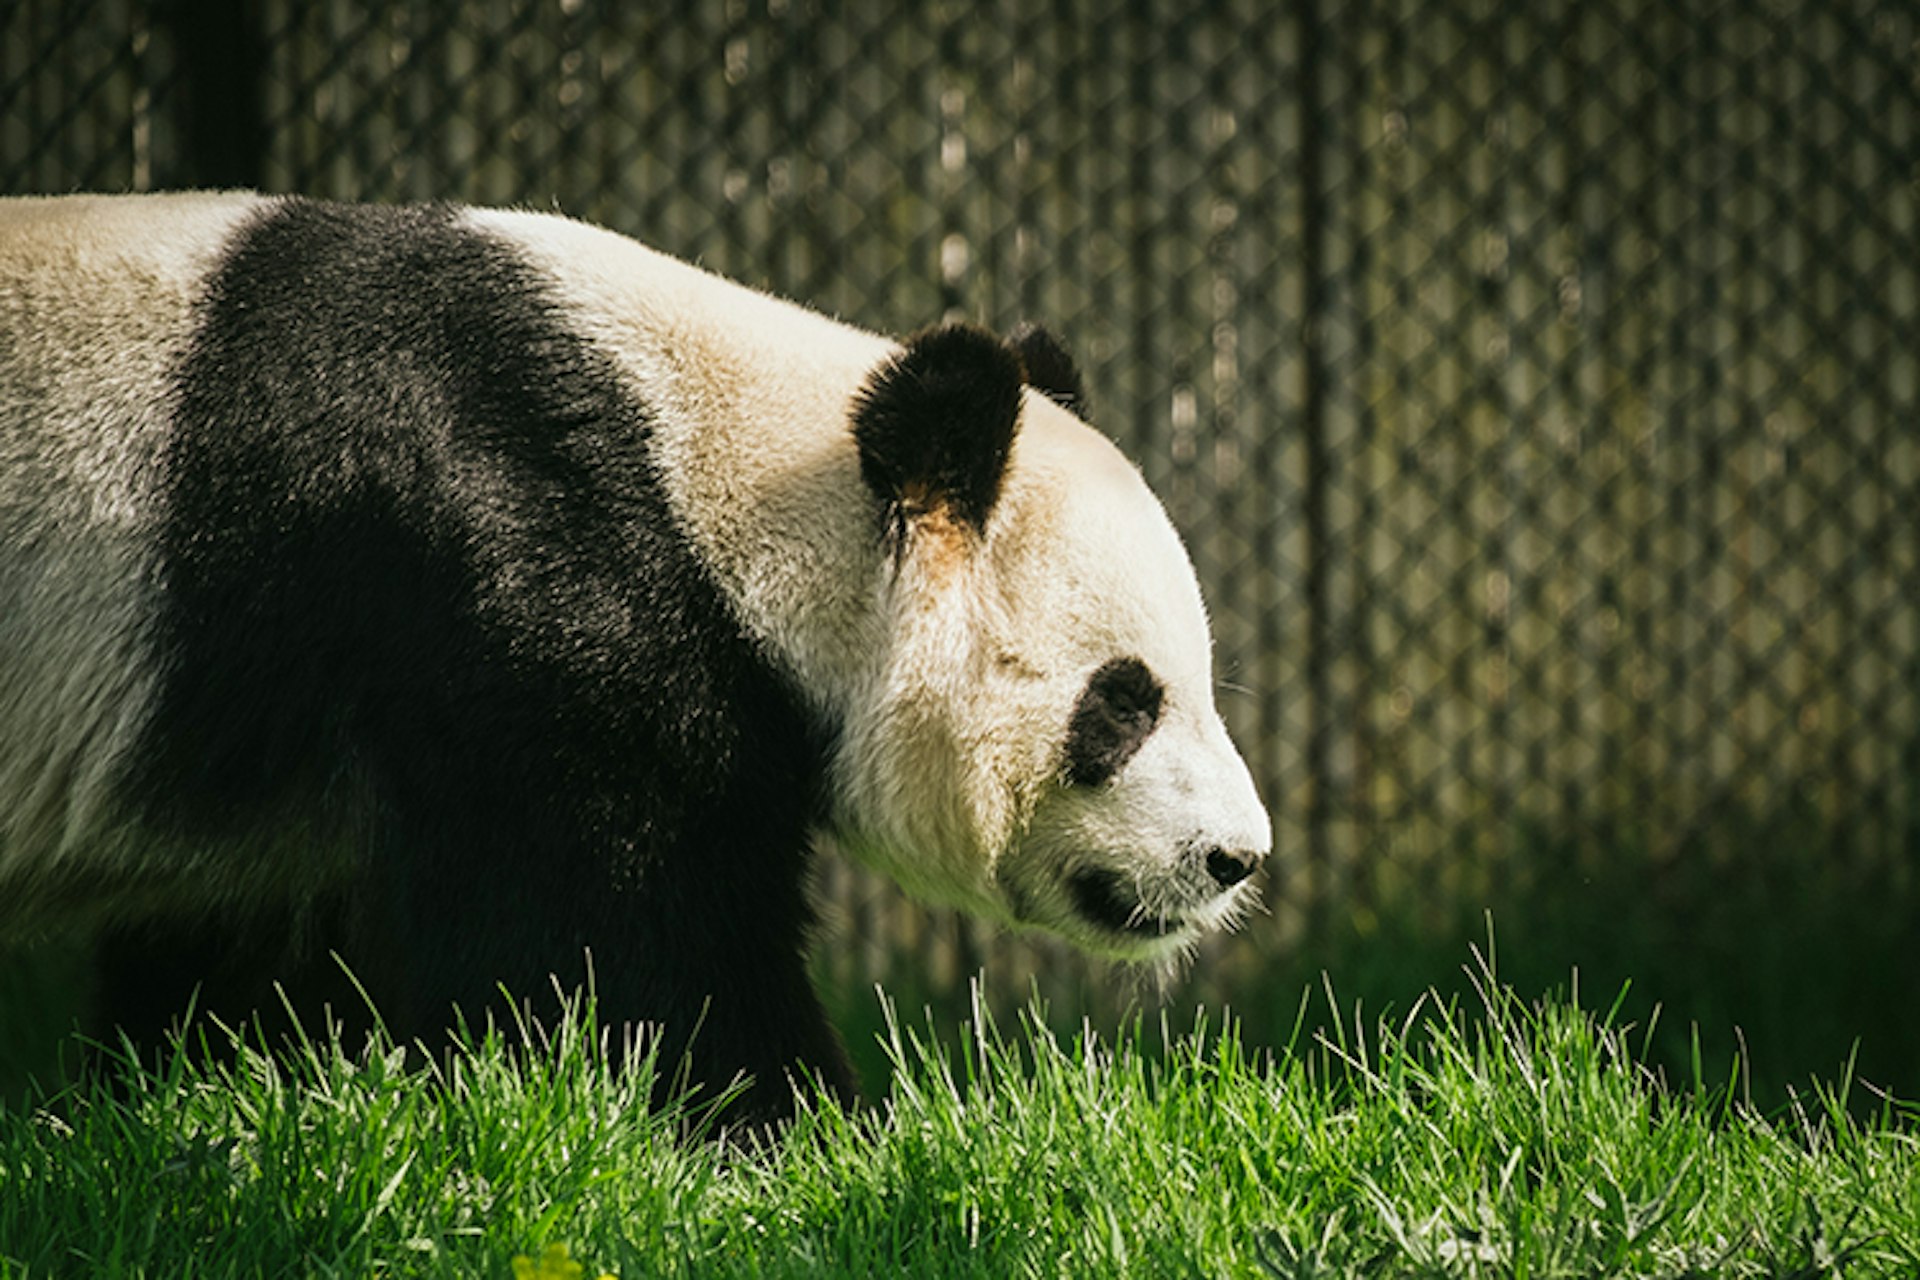 One member of the panda pair at Toronto Zoo. Image by Benson Kua / CC BY-SA 2.0